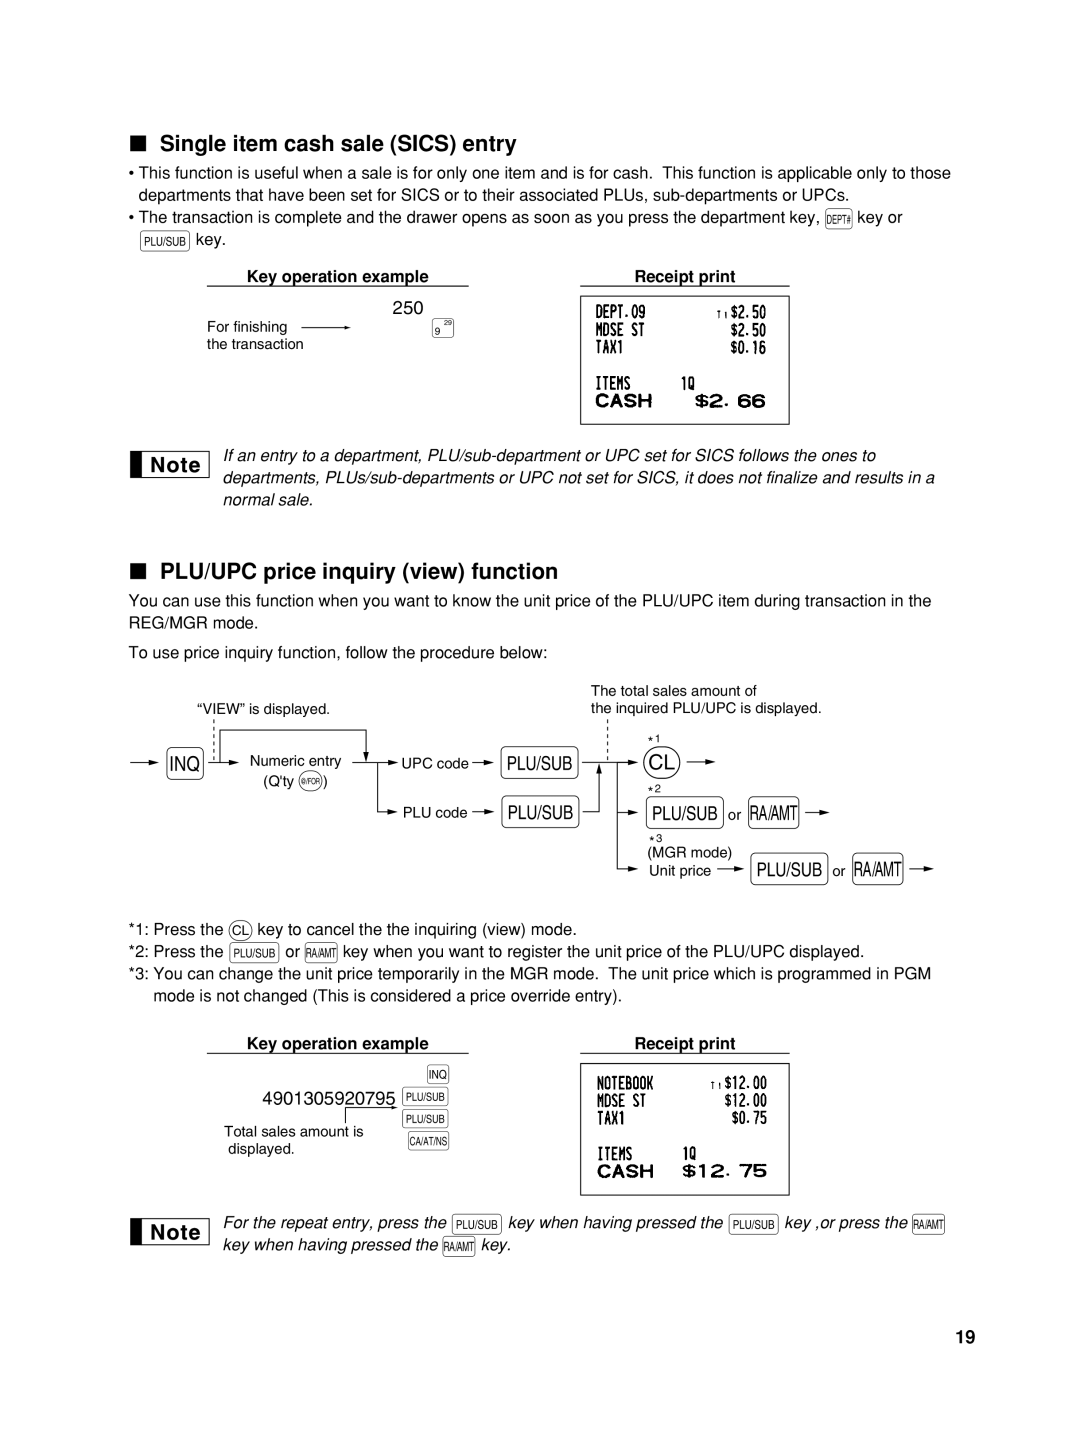 Sharp XE-A42S p por q, Single item cash sale SICS entry, PLU/UPC price inquiry view function, Key operation example 